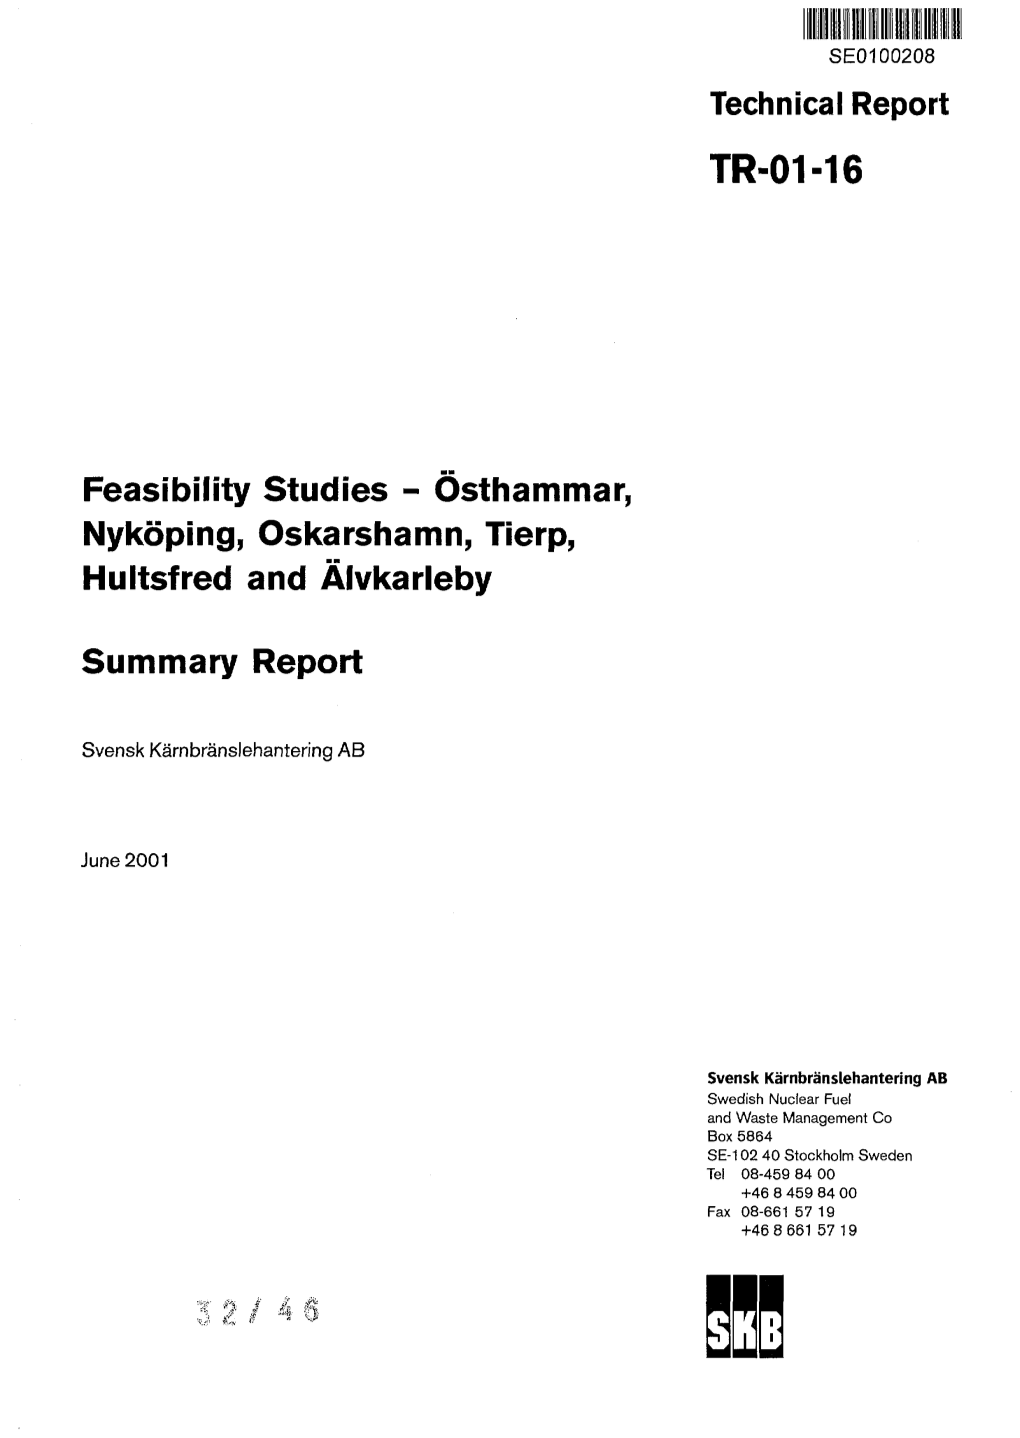 Feasibility Studies - Osthammar, Nykoping, Oskarshamn, Tierp, Hultsfred and Alvkarleby